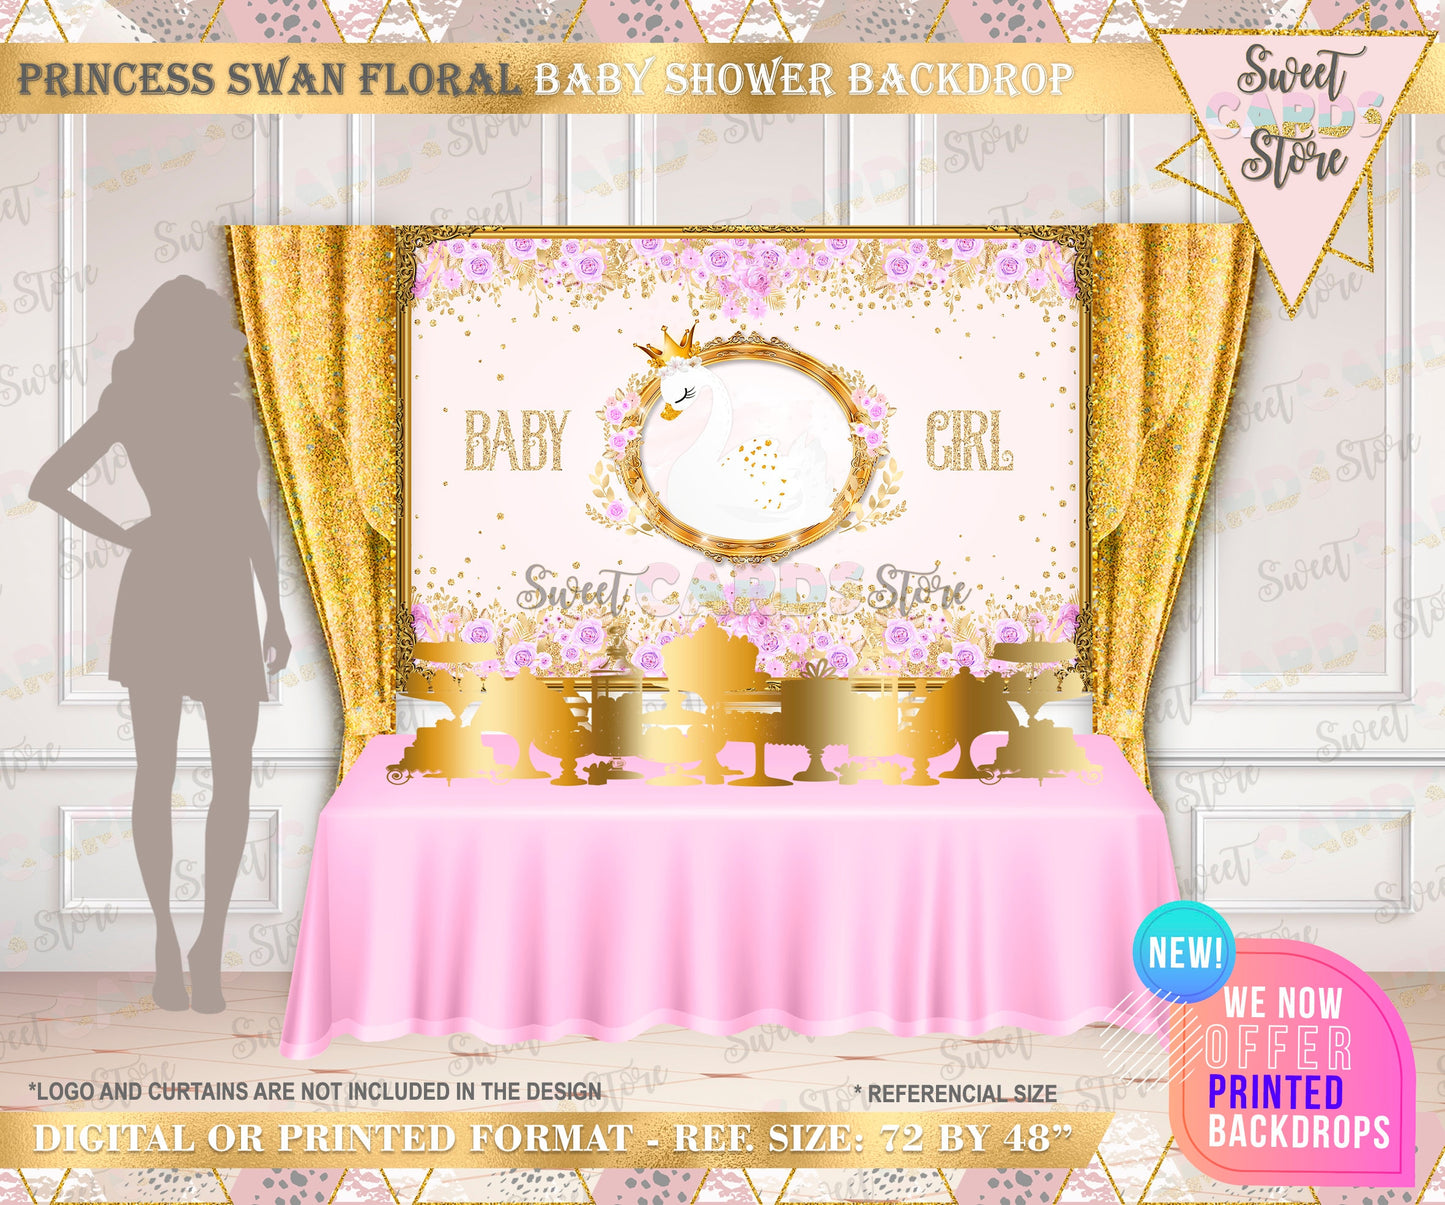 Princess Swan Backdrop, Princess swan banner, crown swan backdrop, Swan flowers glitter backdrop. Princess swan baby shower girl backdrop